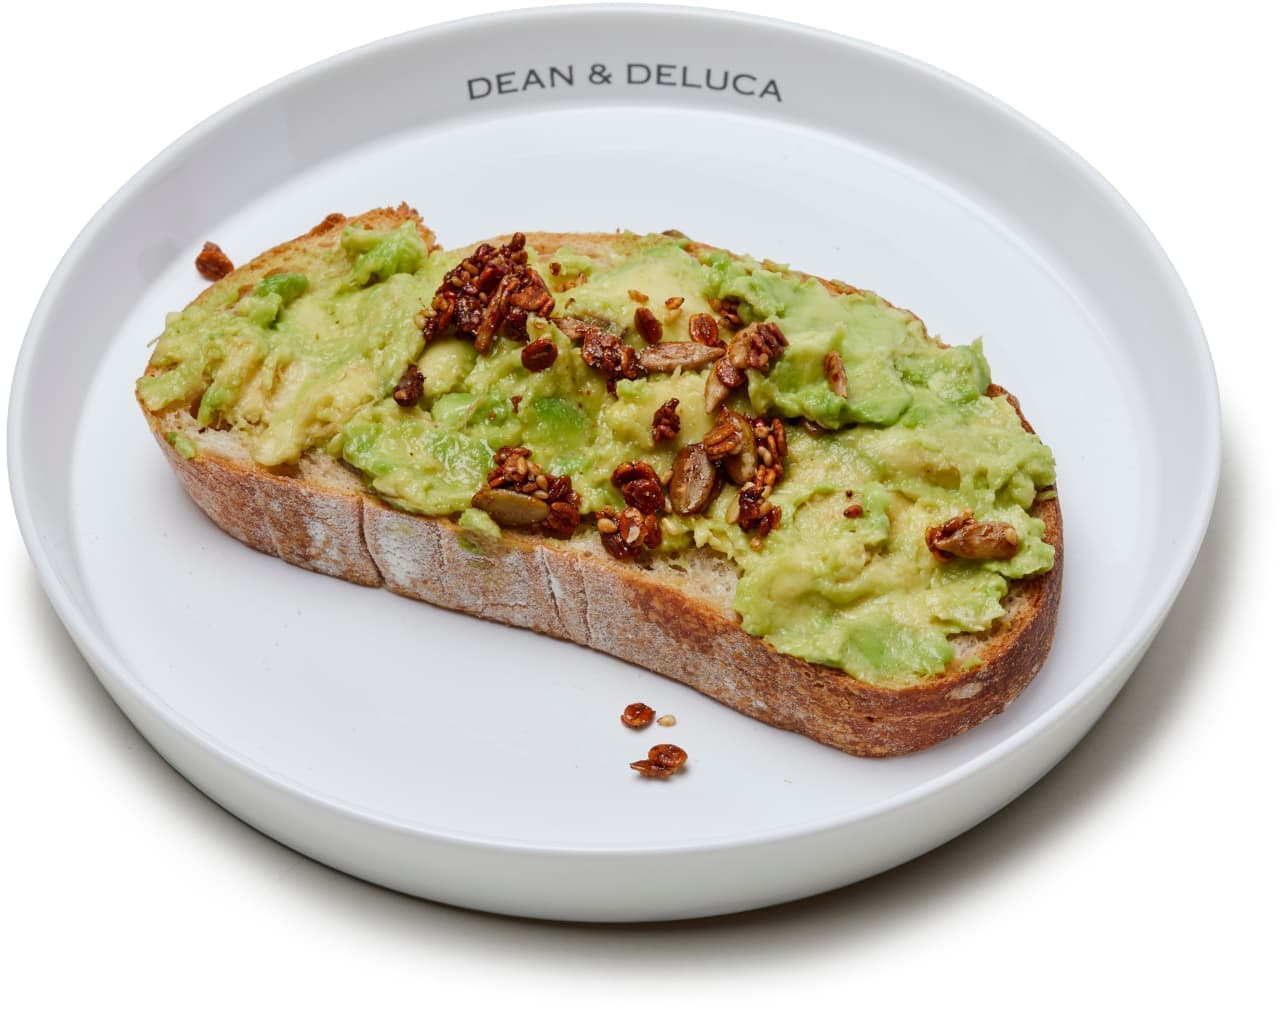 DEAN & DELUCA "Avocado Toast [using Mottainai avocado]".